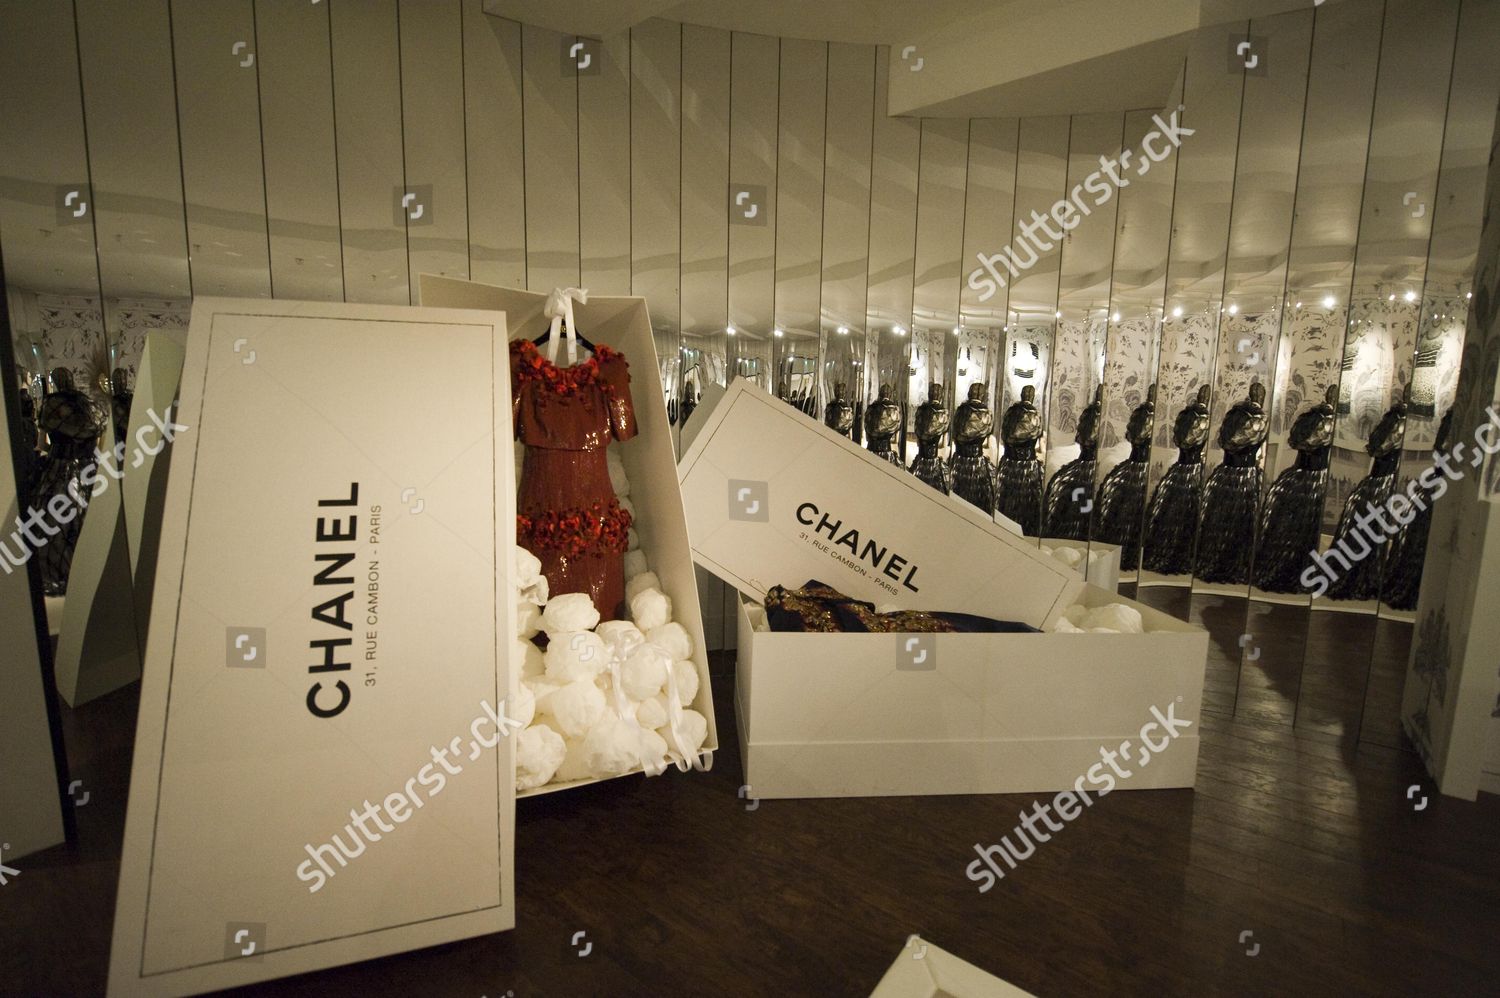 Sprængstoffer Seaport Døde i verden Harrods Taken Over By Chanel Three Editorial Stock Photo - Stock Image |  Shutterstock